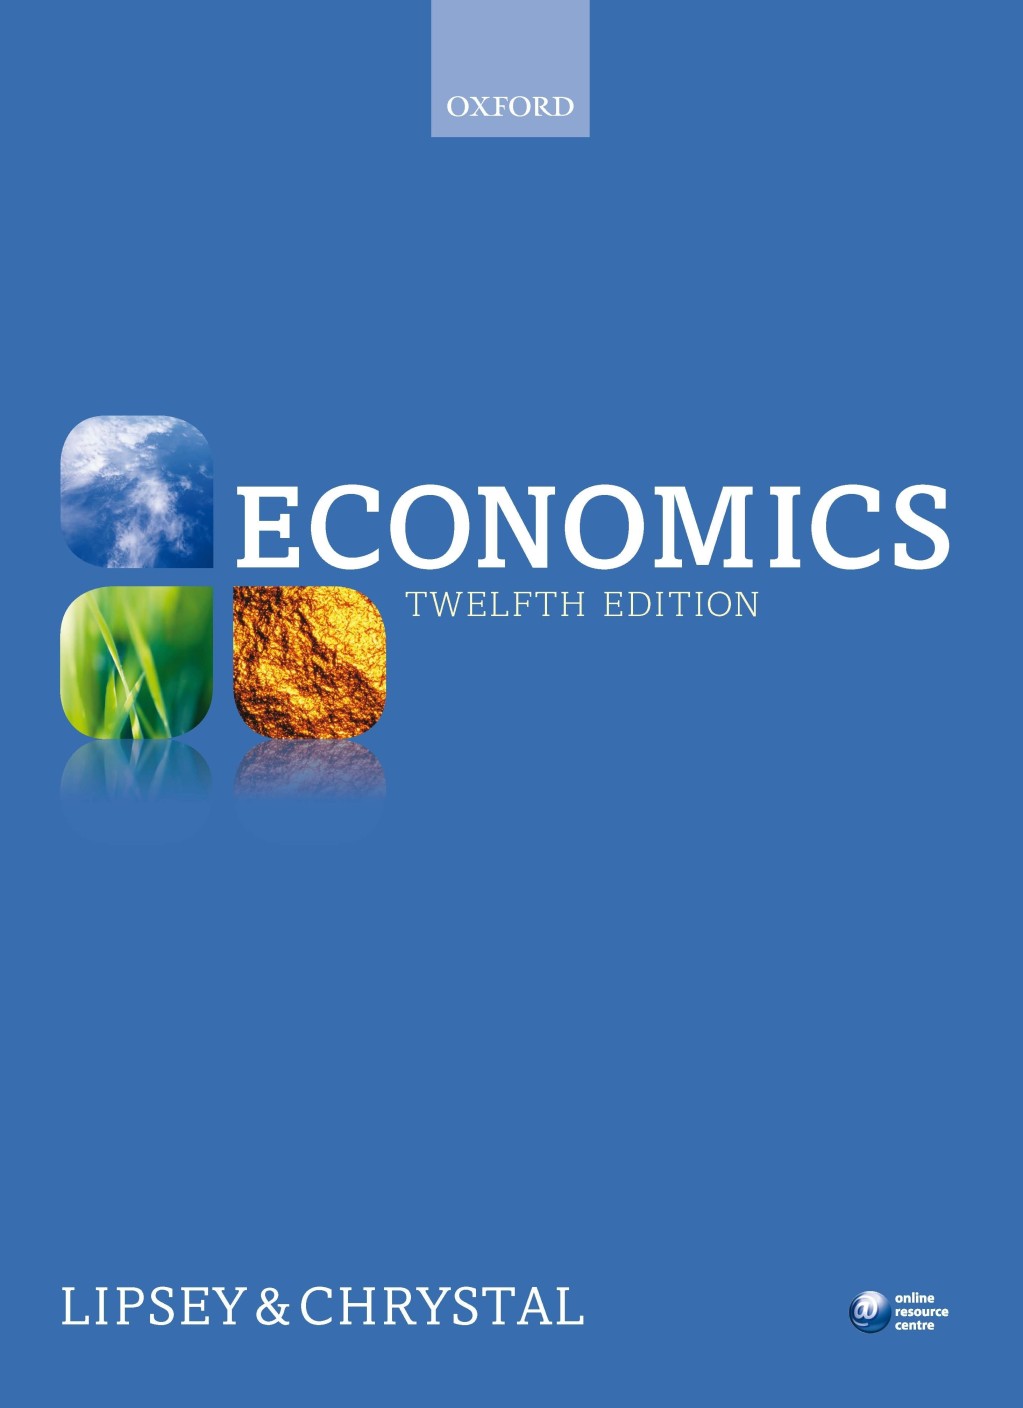 Economics 12th Edition Buy Economics 12th Edition by Lipsey, RichardAuthor; Chrystal, Alec